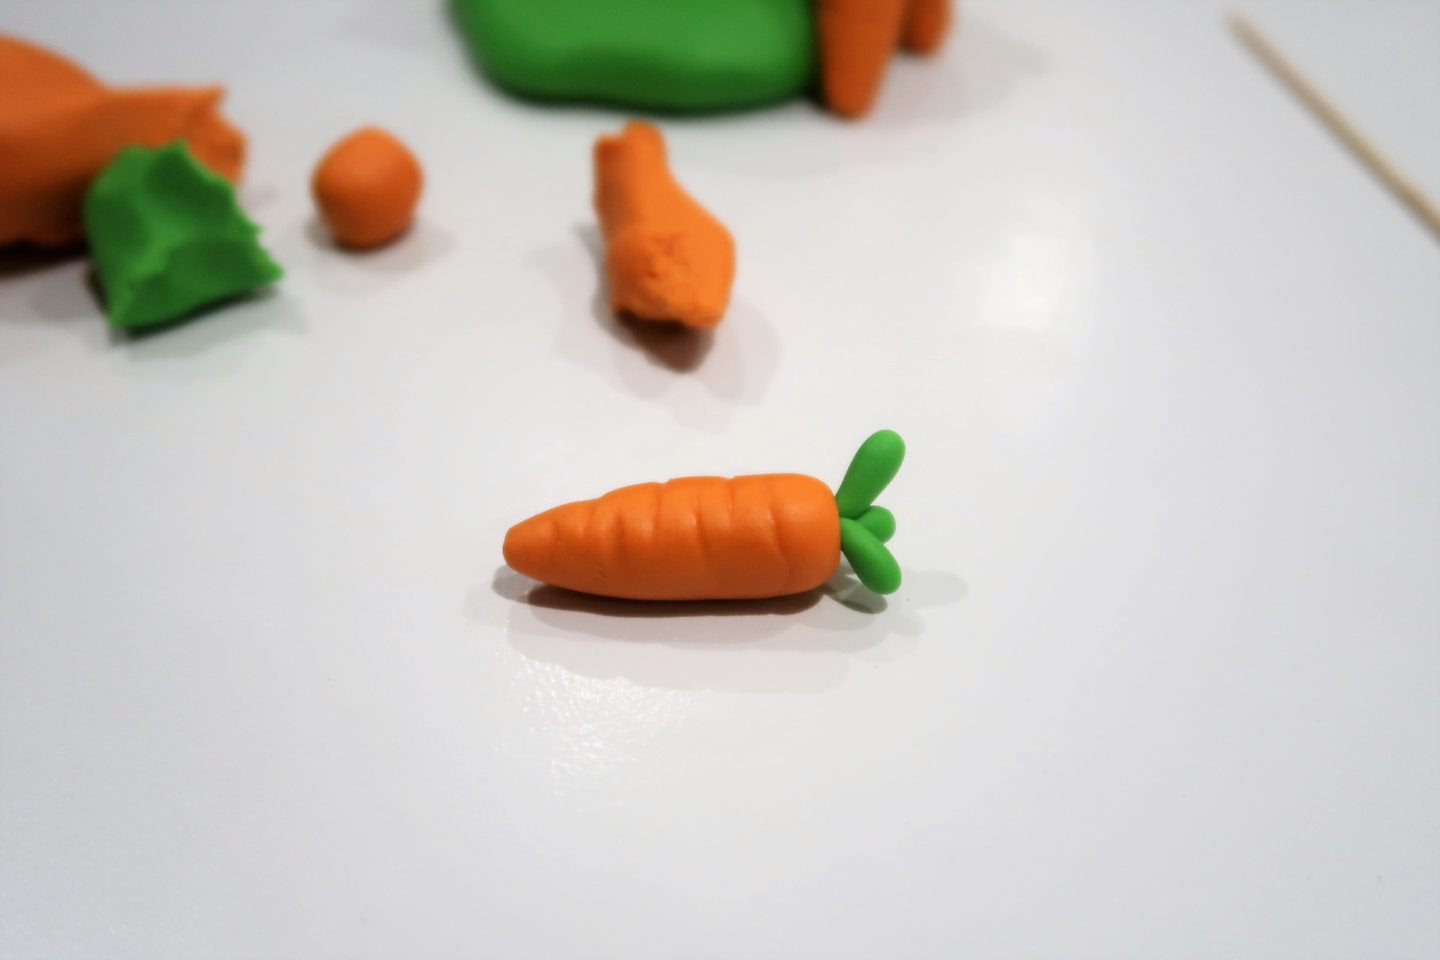 Carrot pieces.